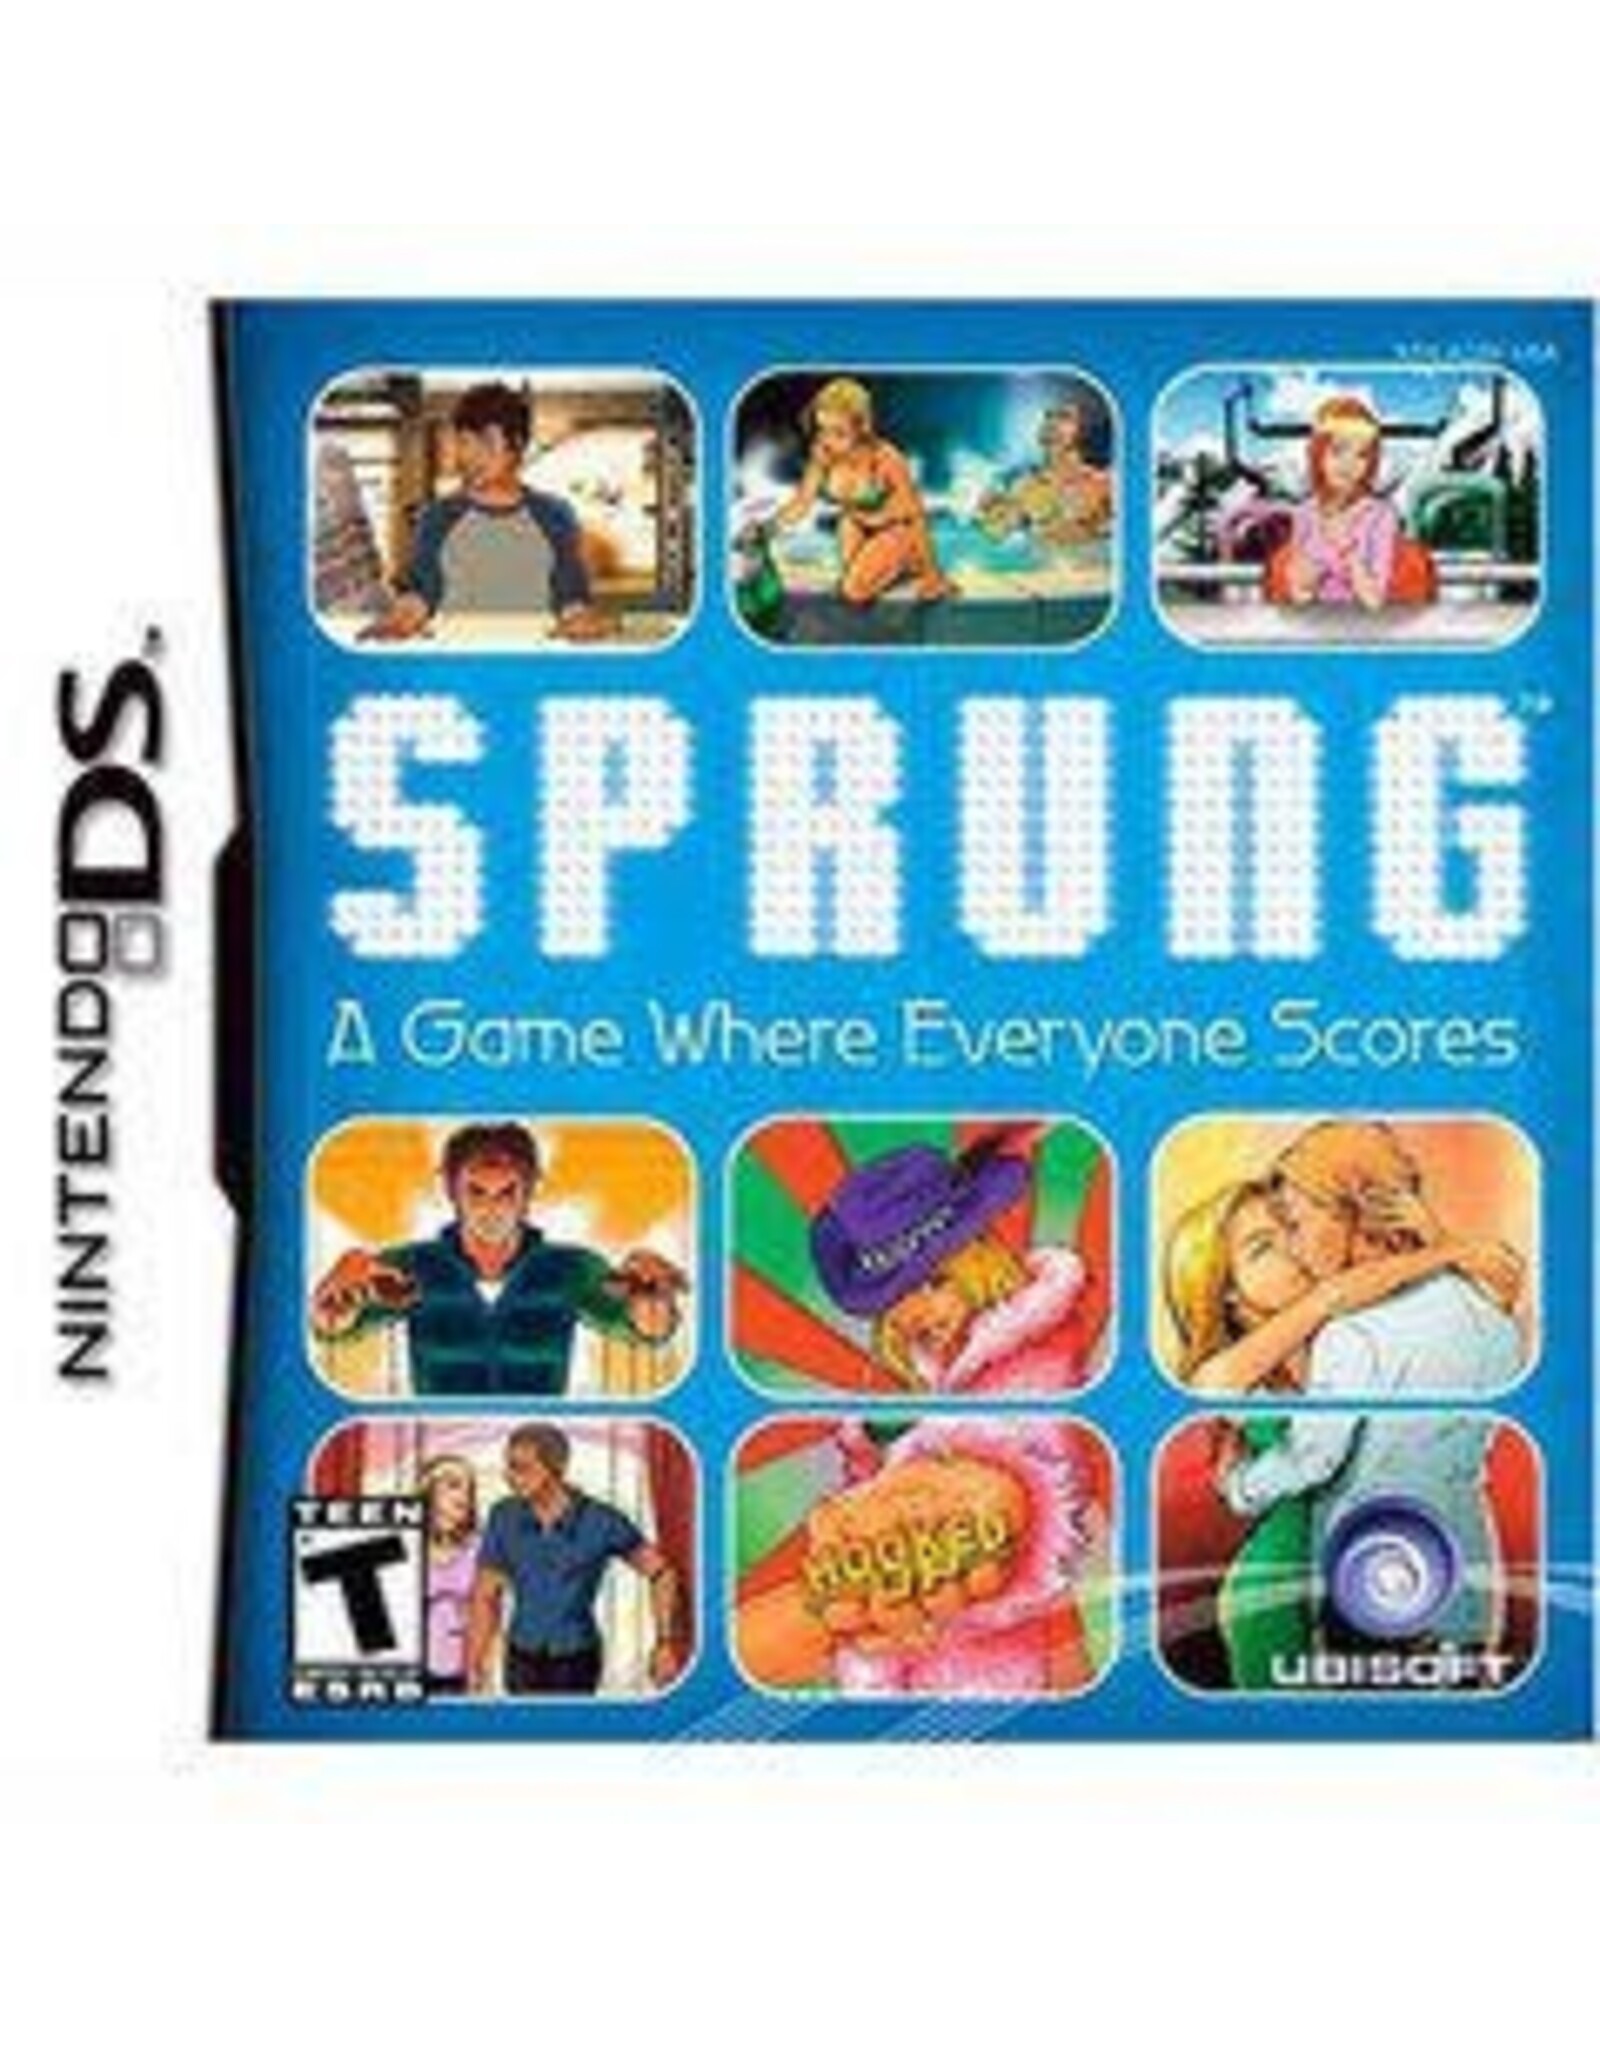 Nintendo DS Sprung (CiB)